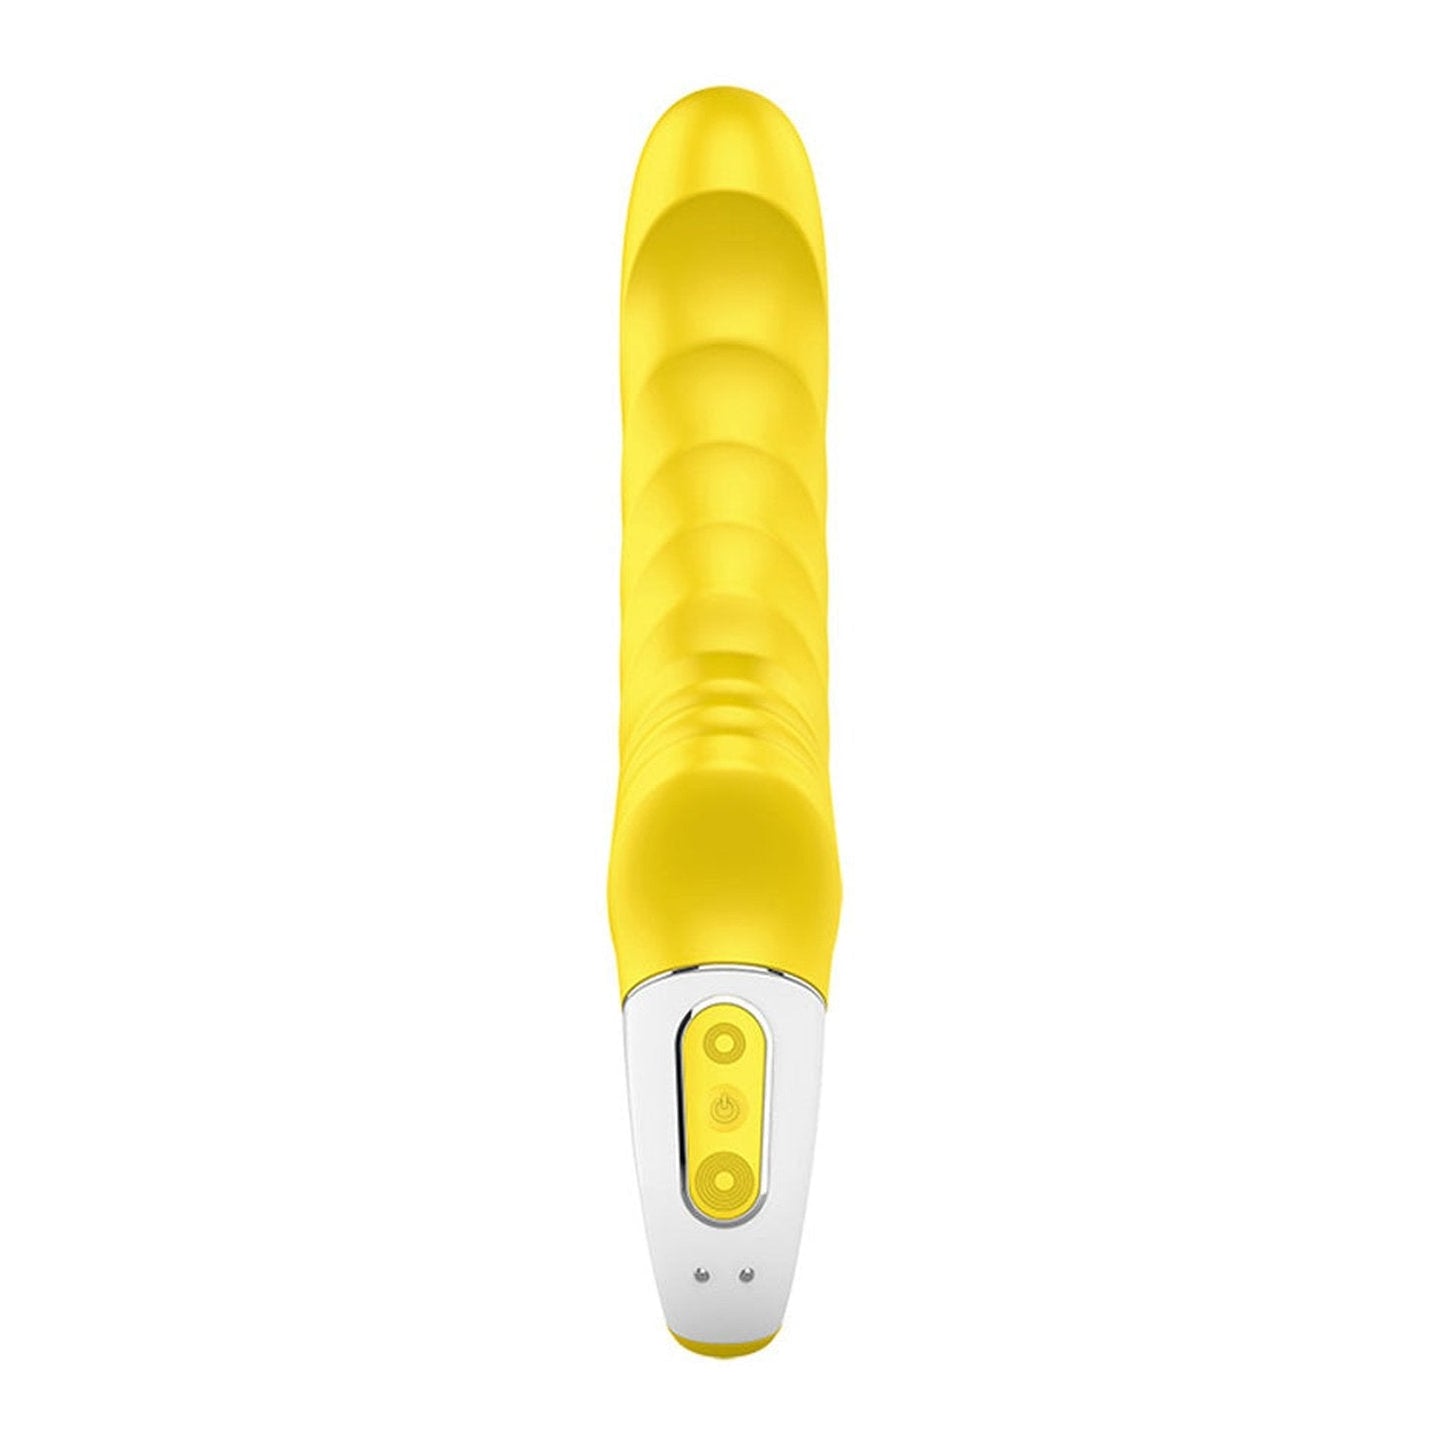 Yummy Sunshine Vibrator - Yellow